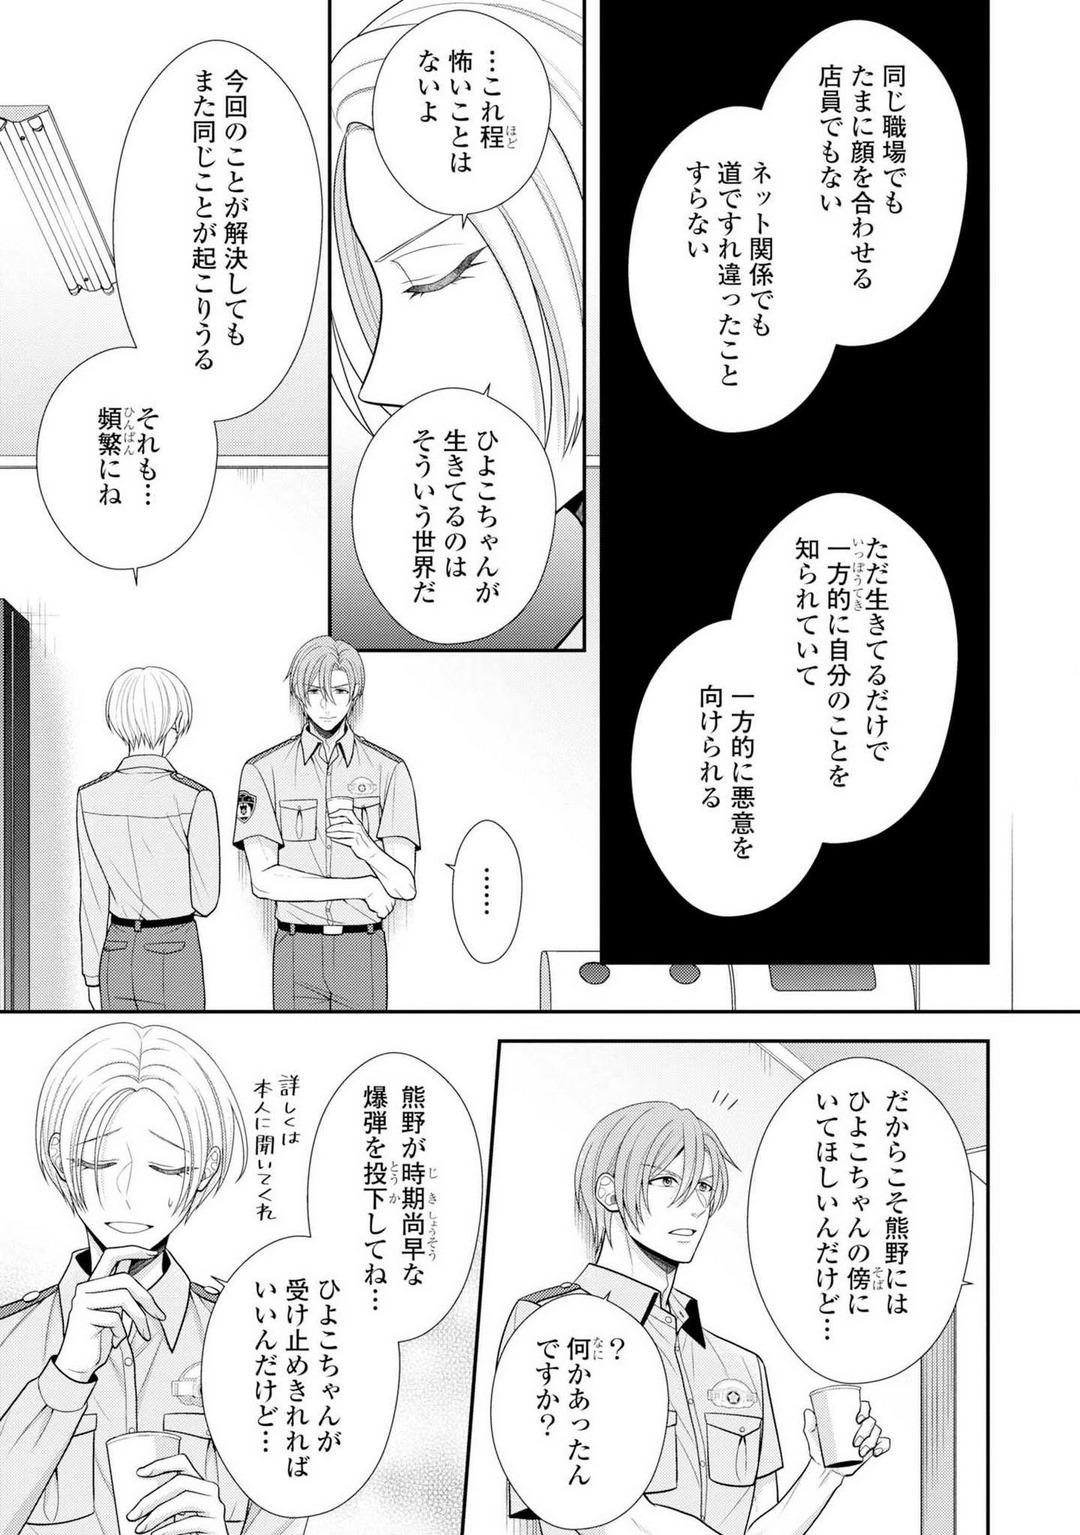 Sucking Dicks Sono Keisatsukan, Tokidoki Yajuu! 19-36 Solo - Page 8